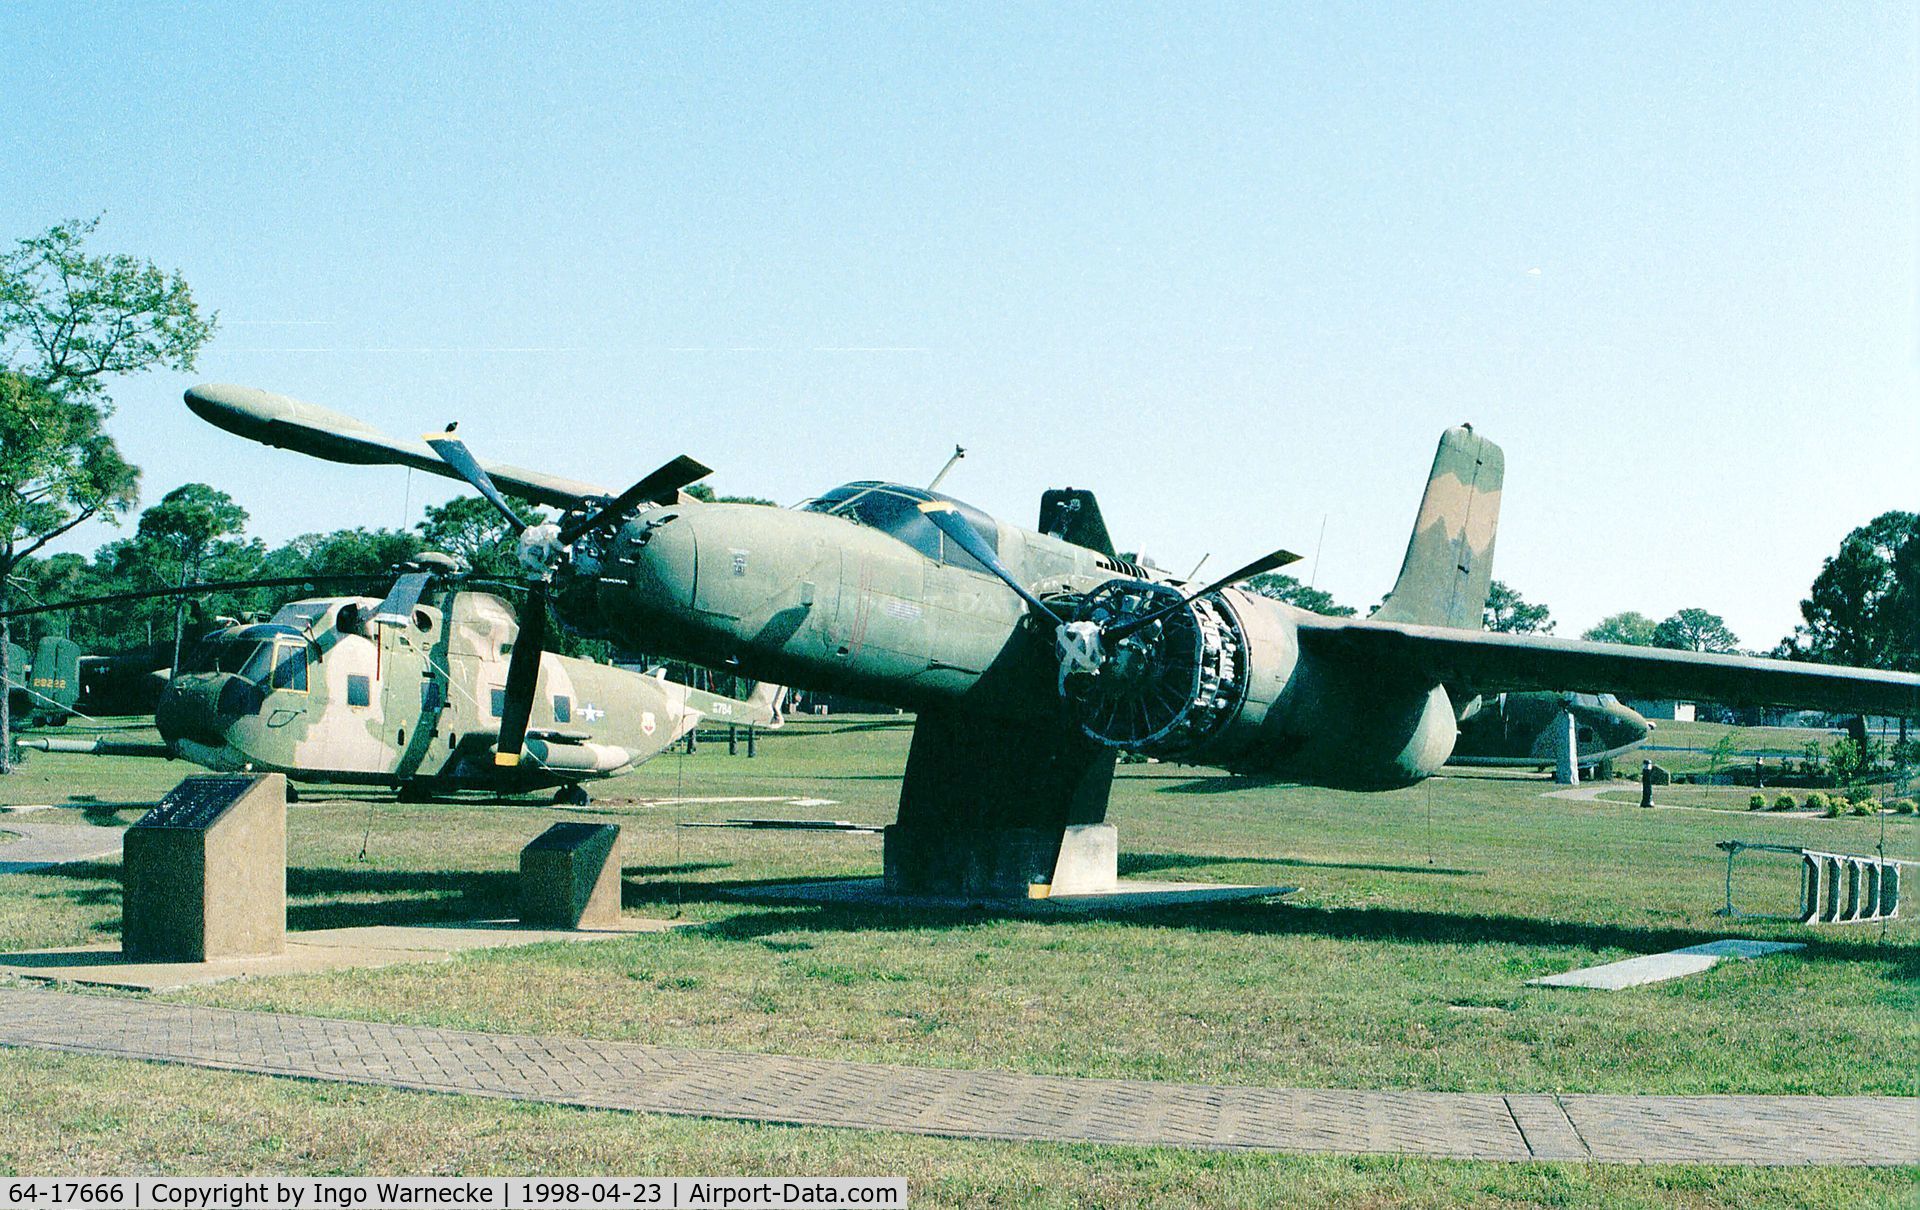 64-17666, 1964 Douglas-On Mark B-26K Counter Invader C/N 28762 (was 44-35483), Douglas (On Mark) B-26K Invader of USAF at Hurlburt Field historic aircraft park